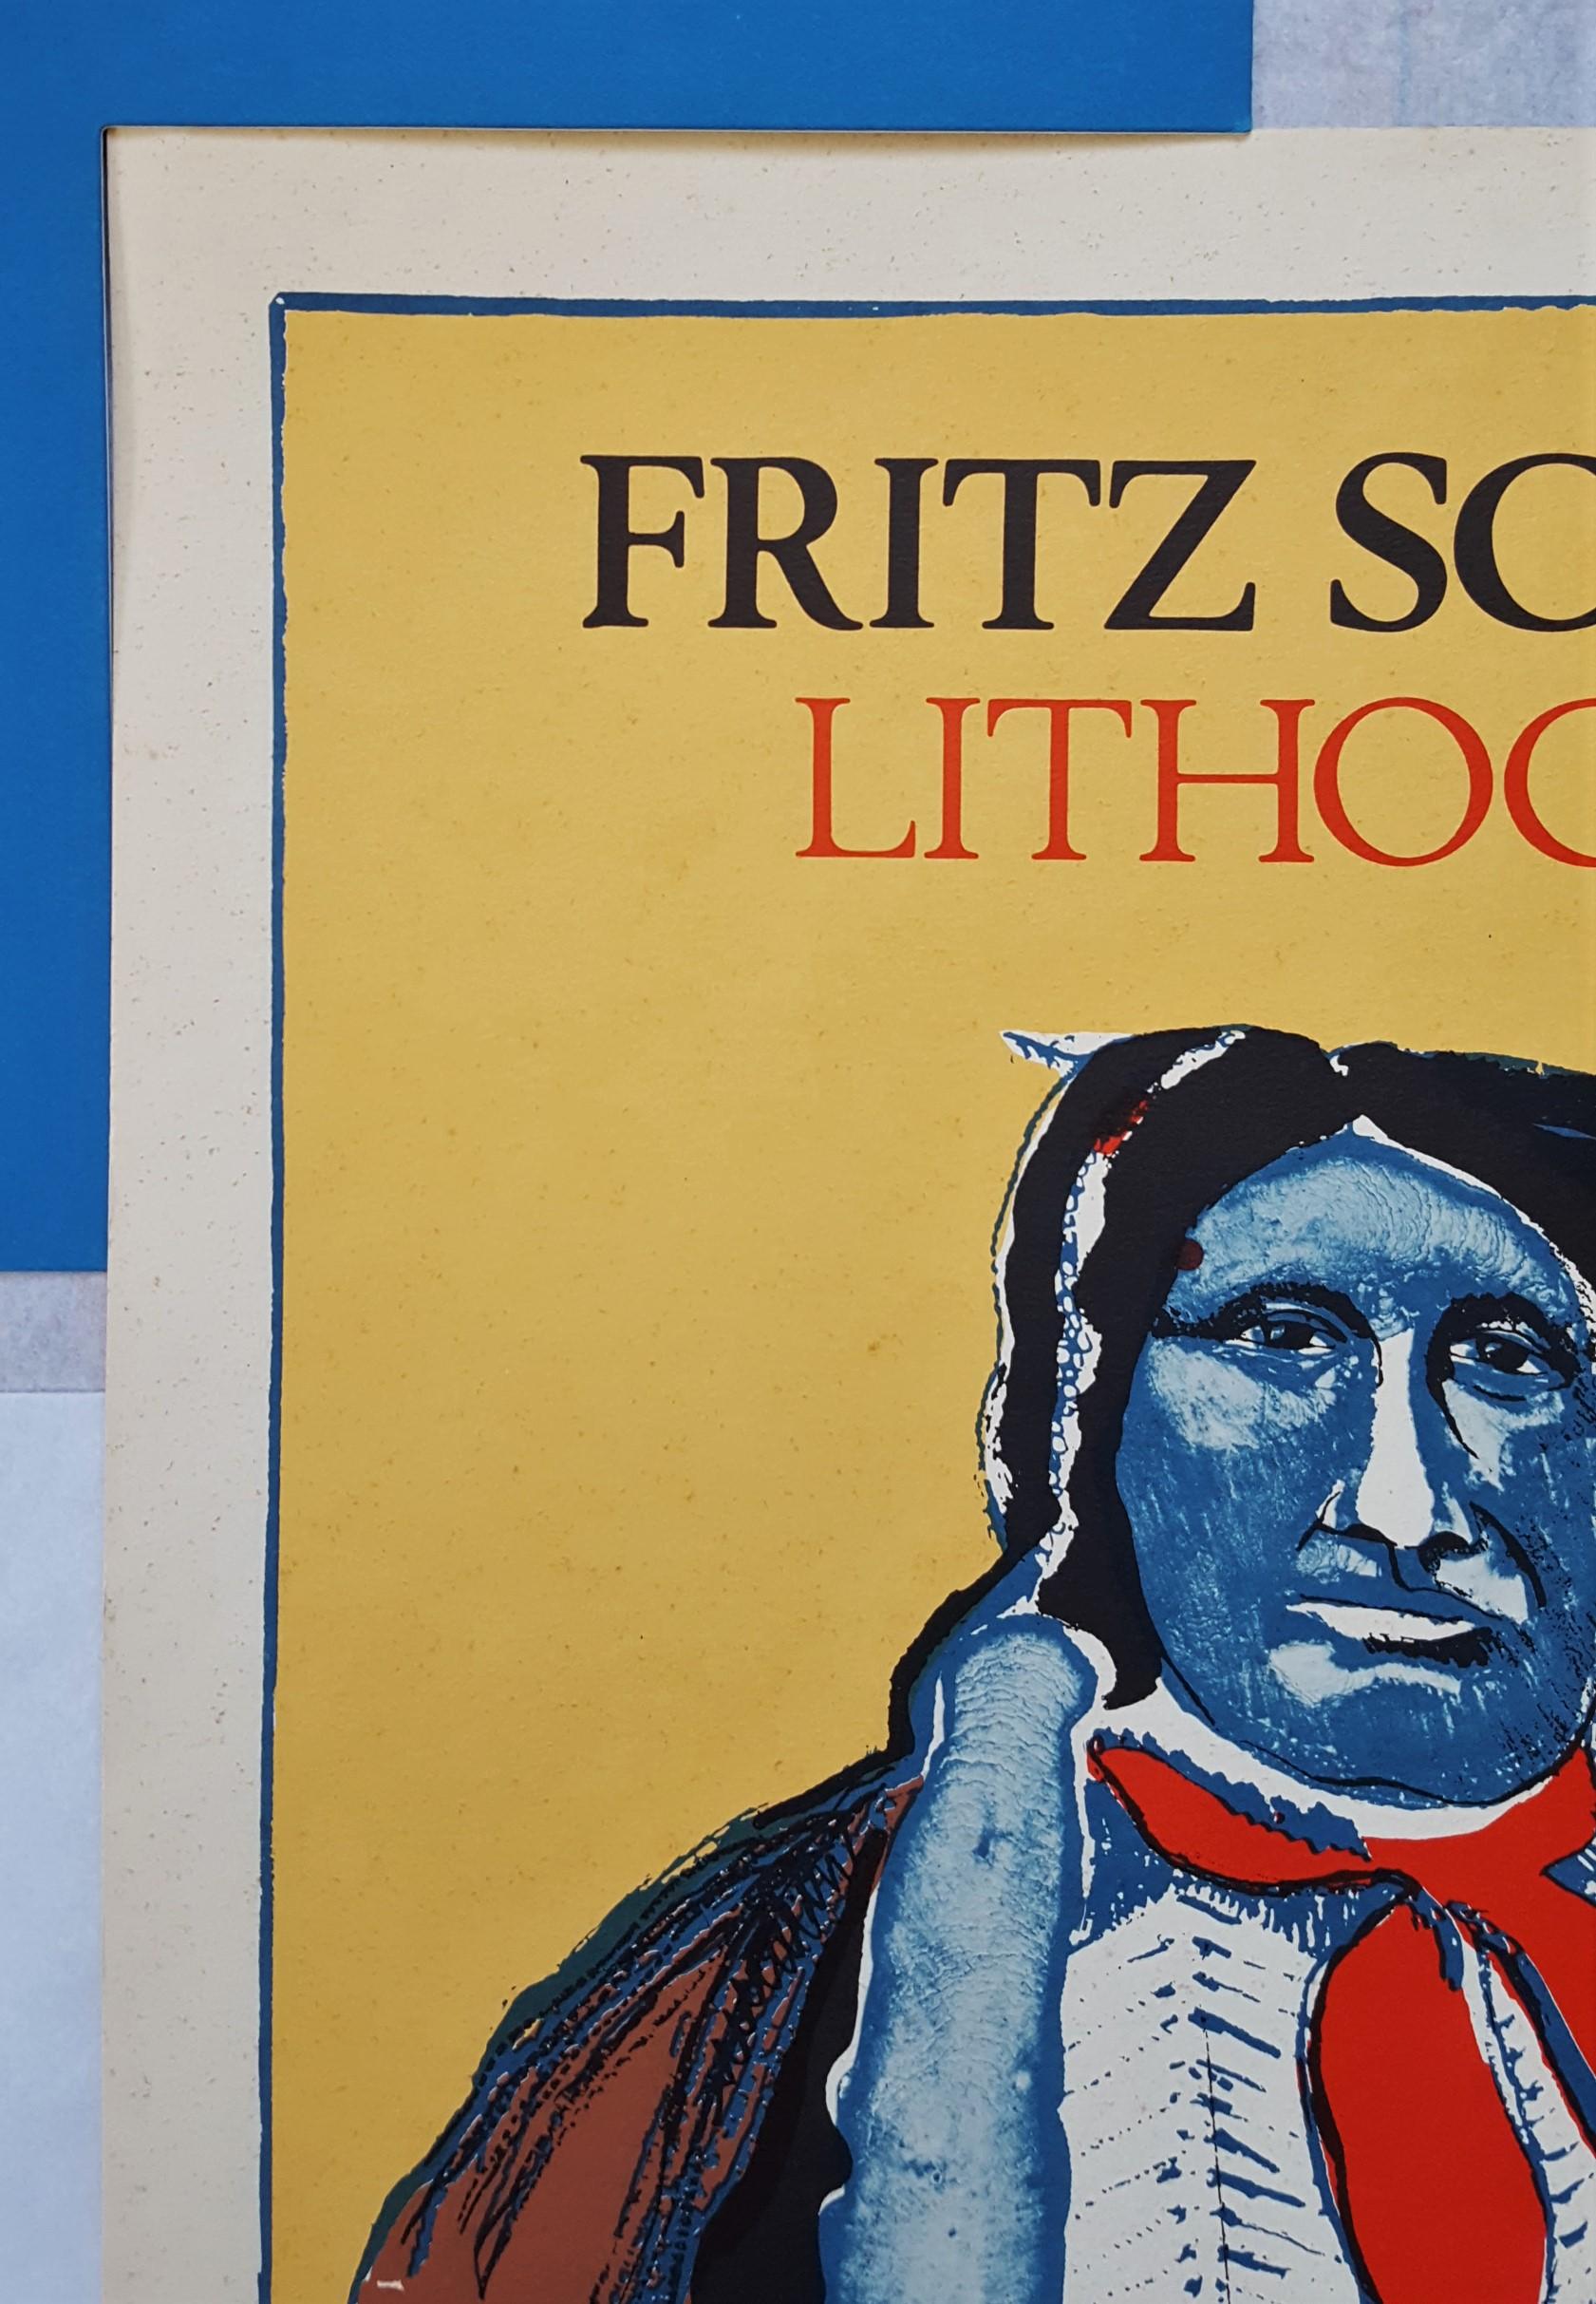 fritz scholder lithographs for sale